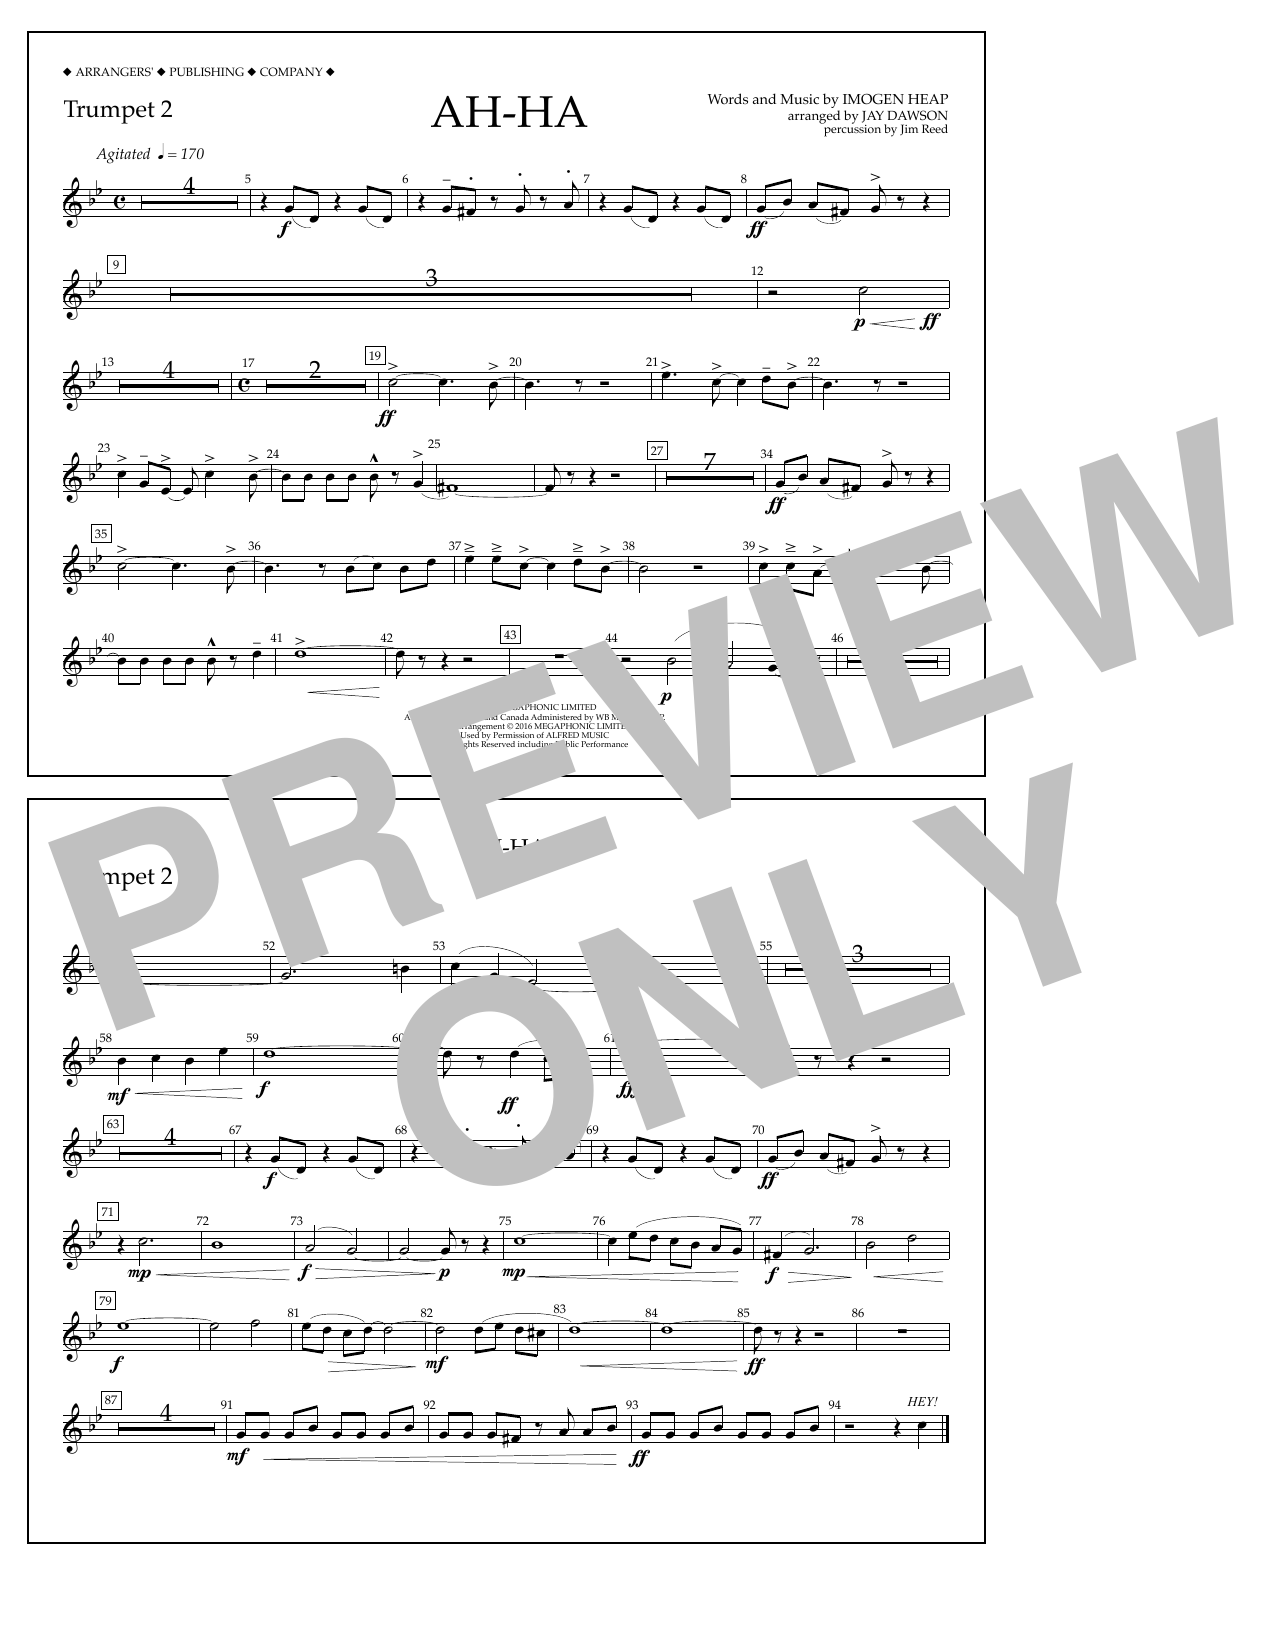 Download Jay Dawson Ah-ha - Trumpet 2 Sheet Music